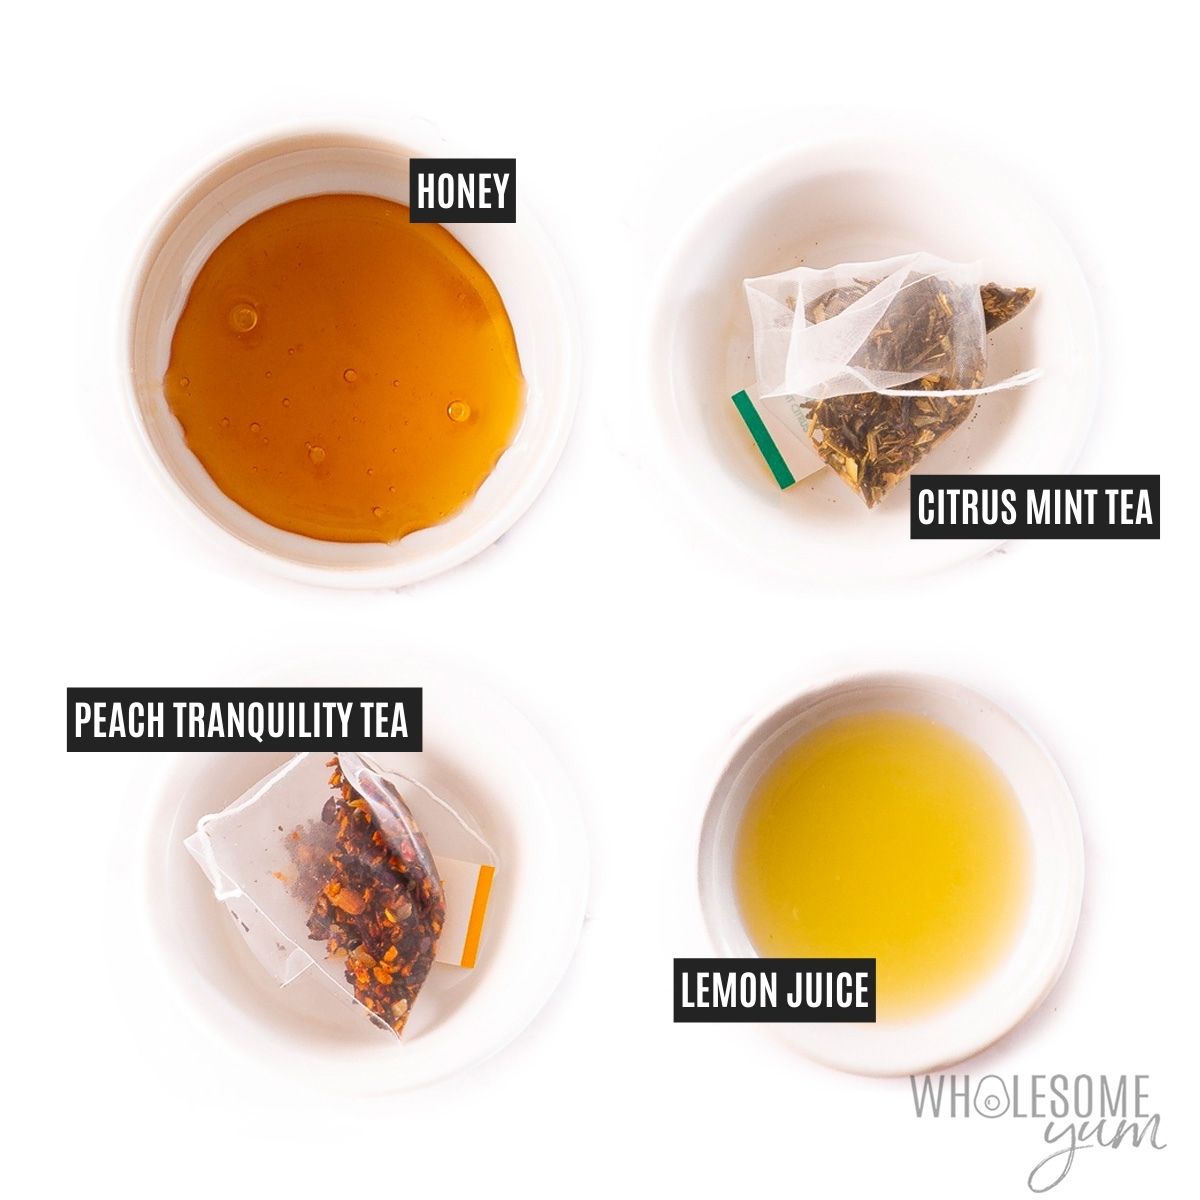 Honey citrus mint tea ingredients.